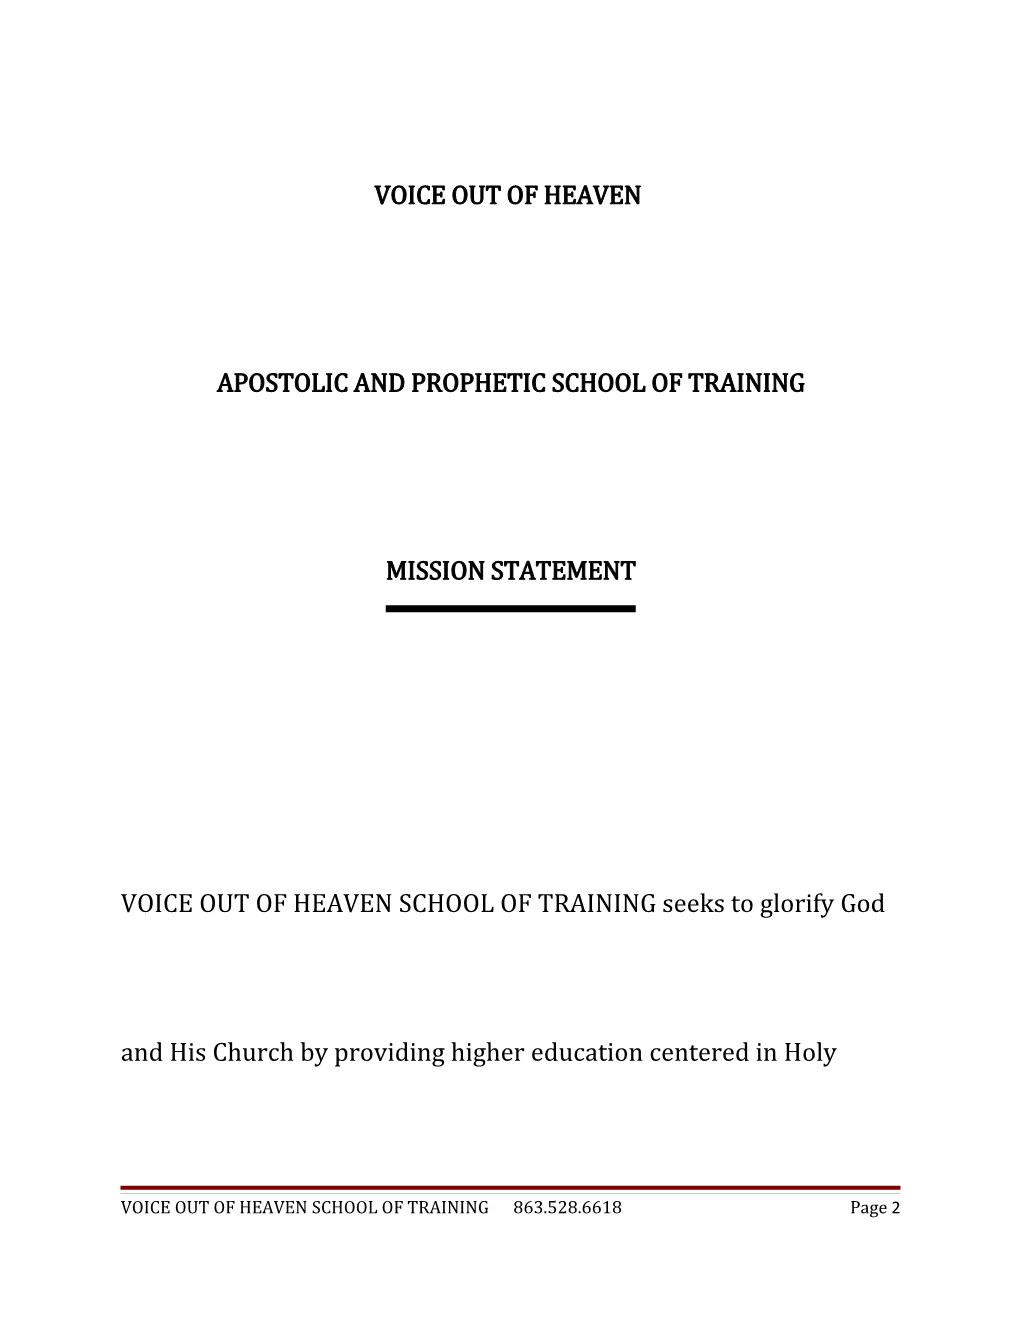 Apostolic and Prophetic School of Training